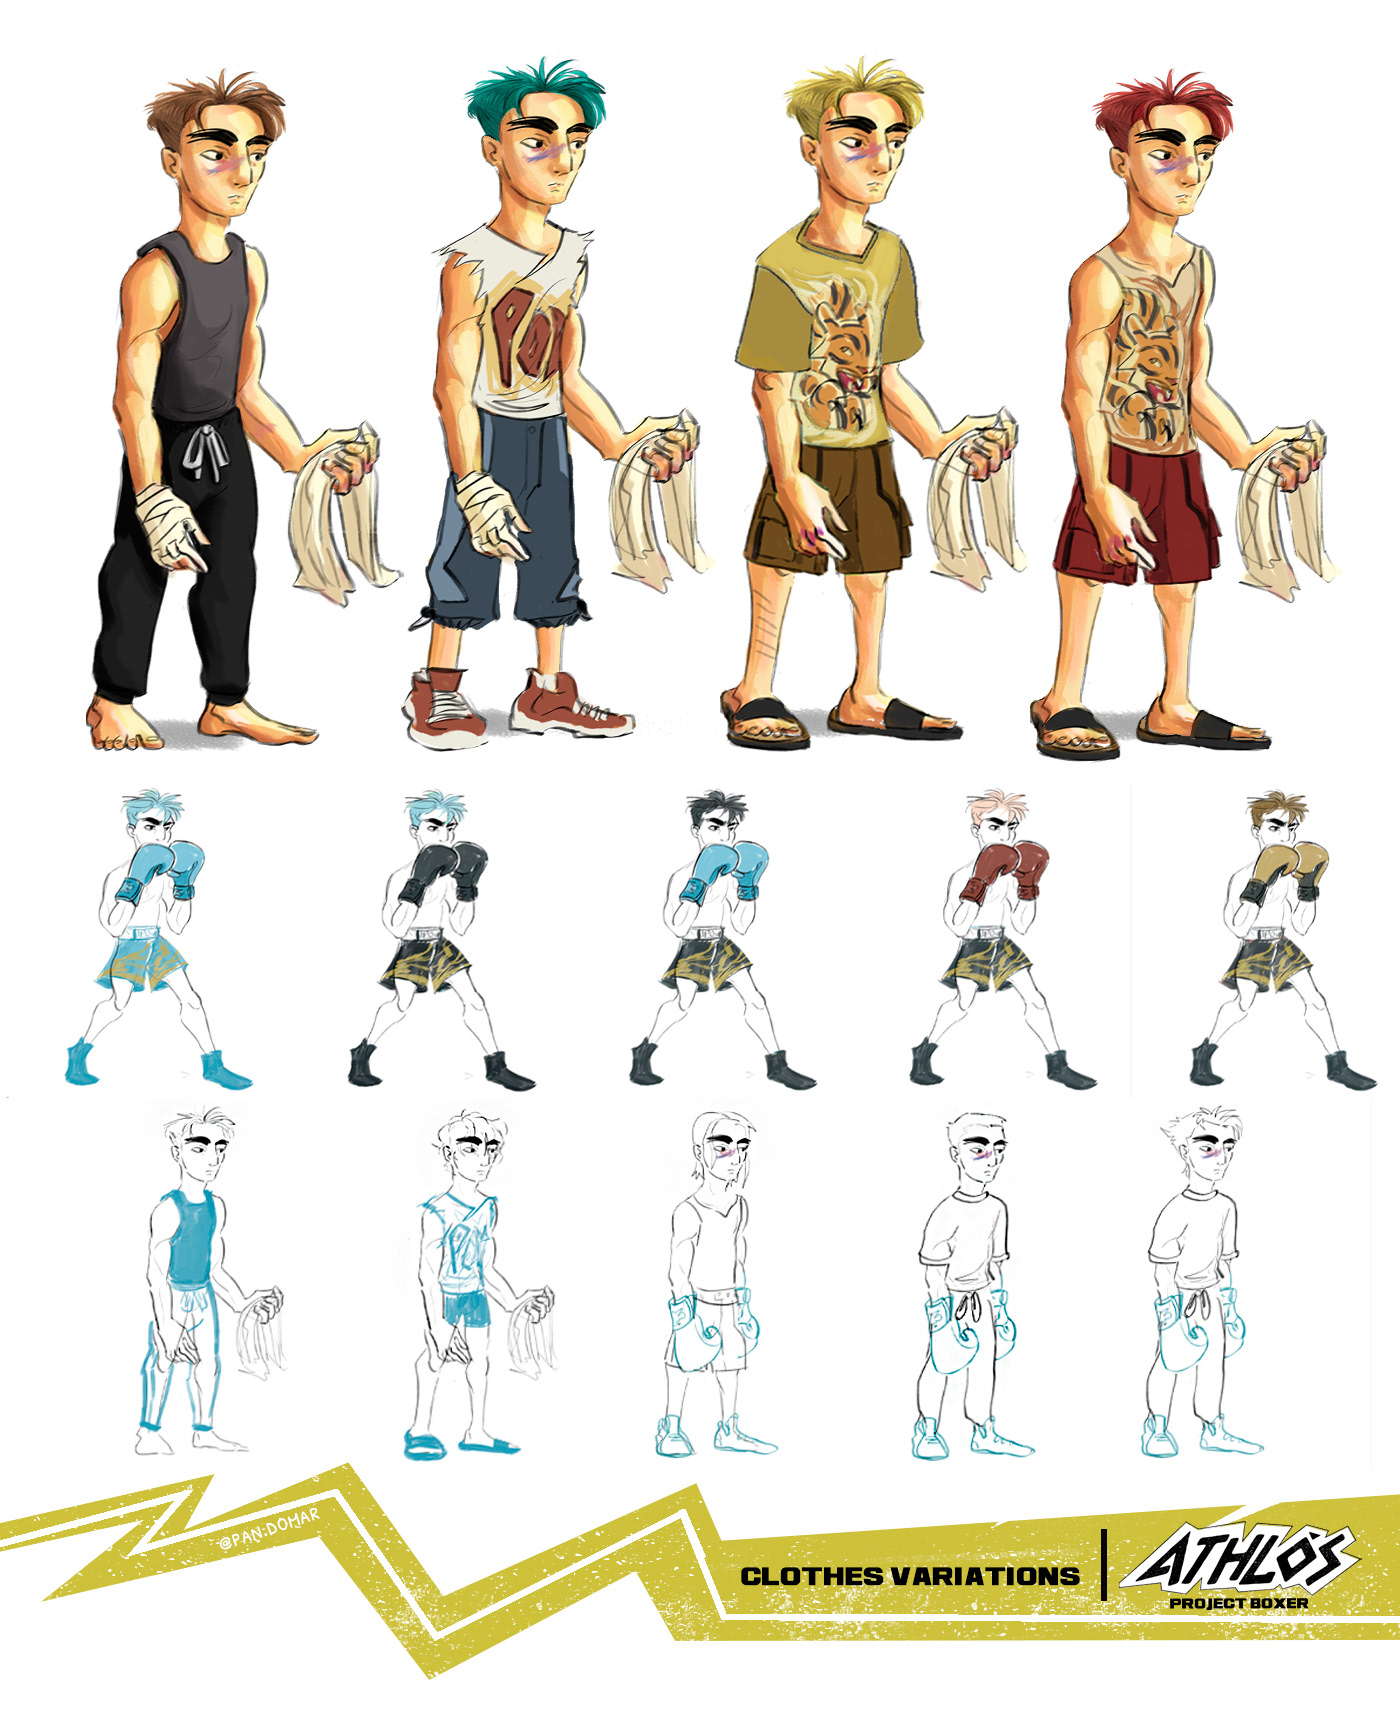 ILLUSTRATION  Character design  concept art Boxe sport Boxing fight comic Webtoon fanart